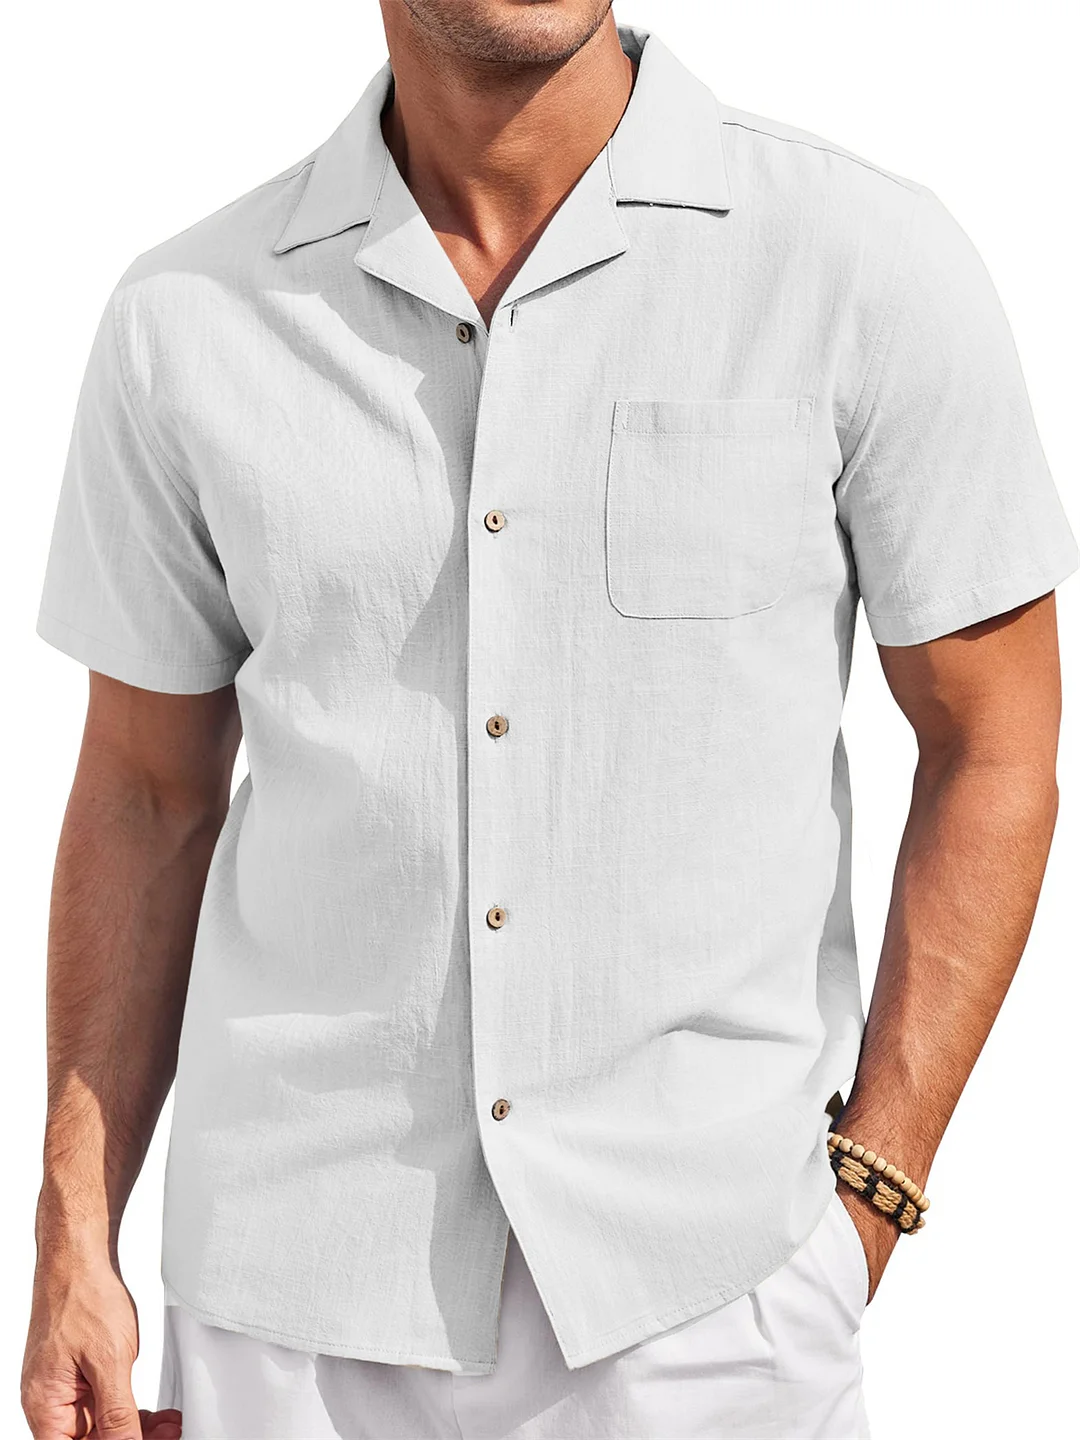 Suitmens Men's Cotton and Linen Cuban Collar Pocket Casual Short Sleeve Shirt